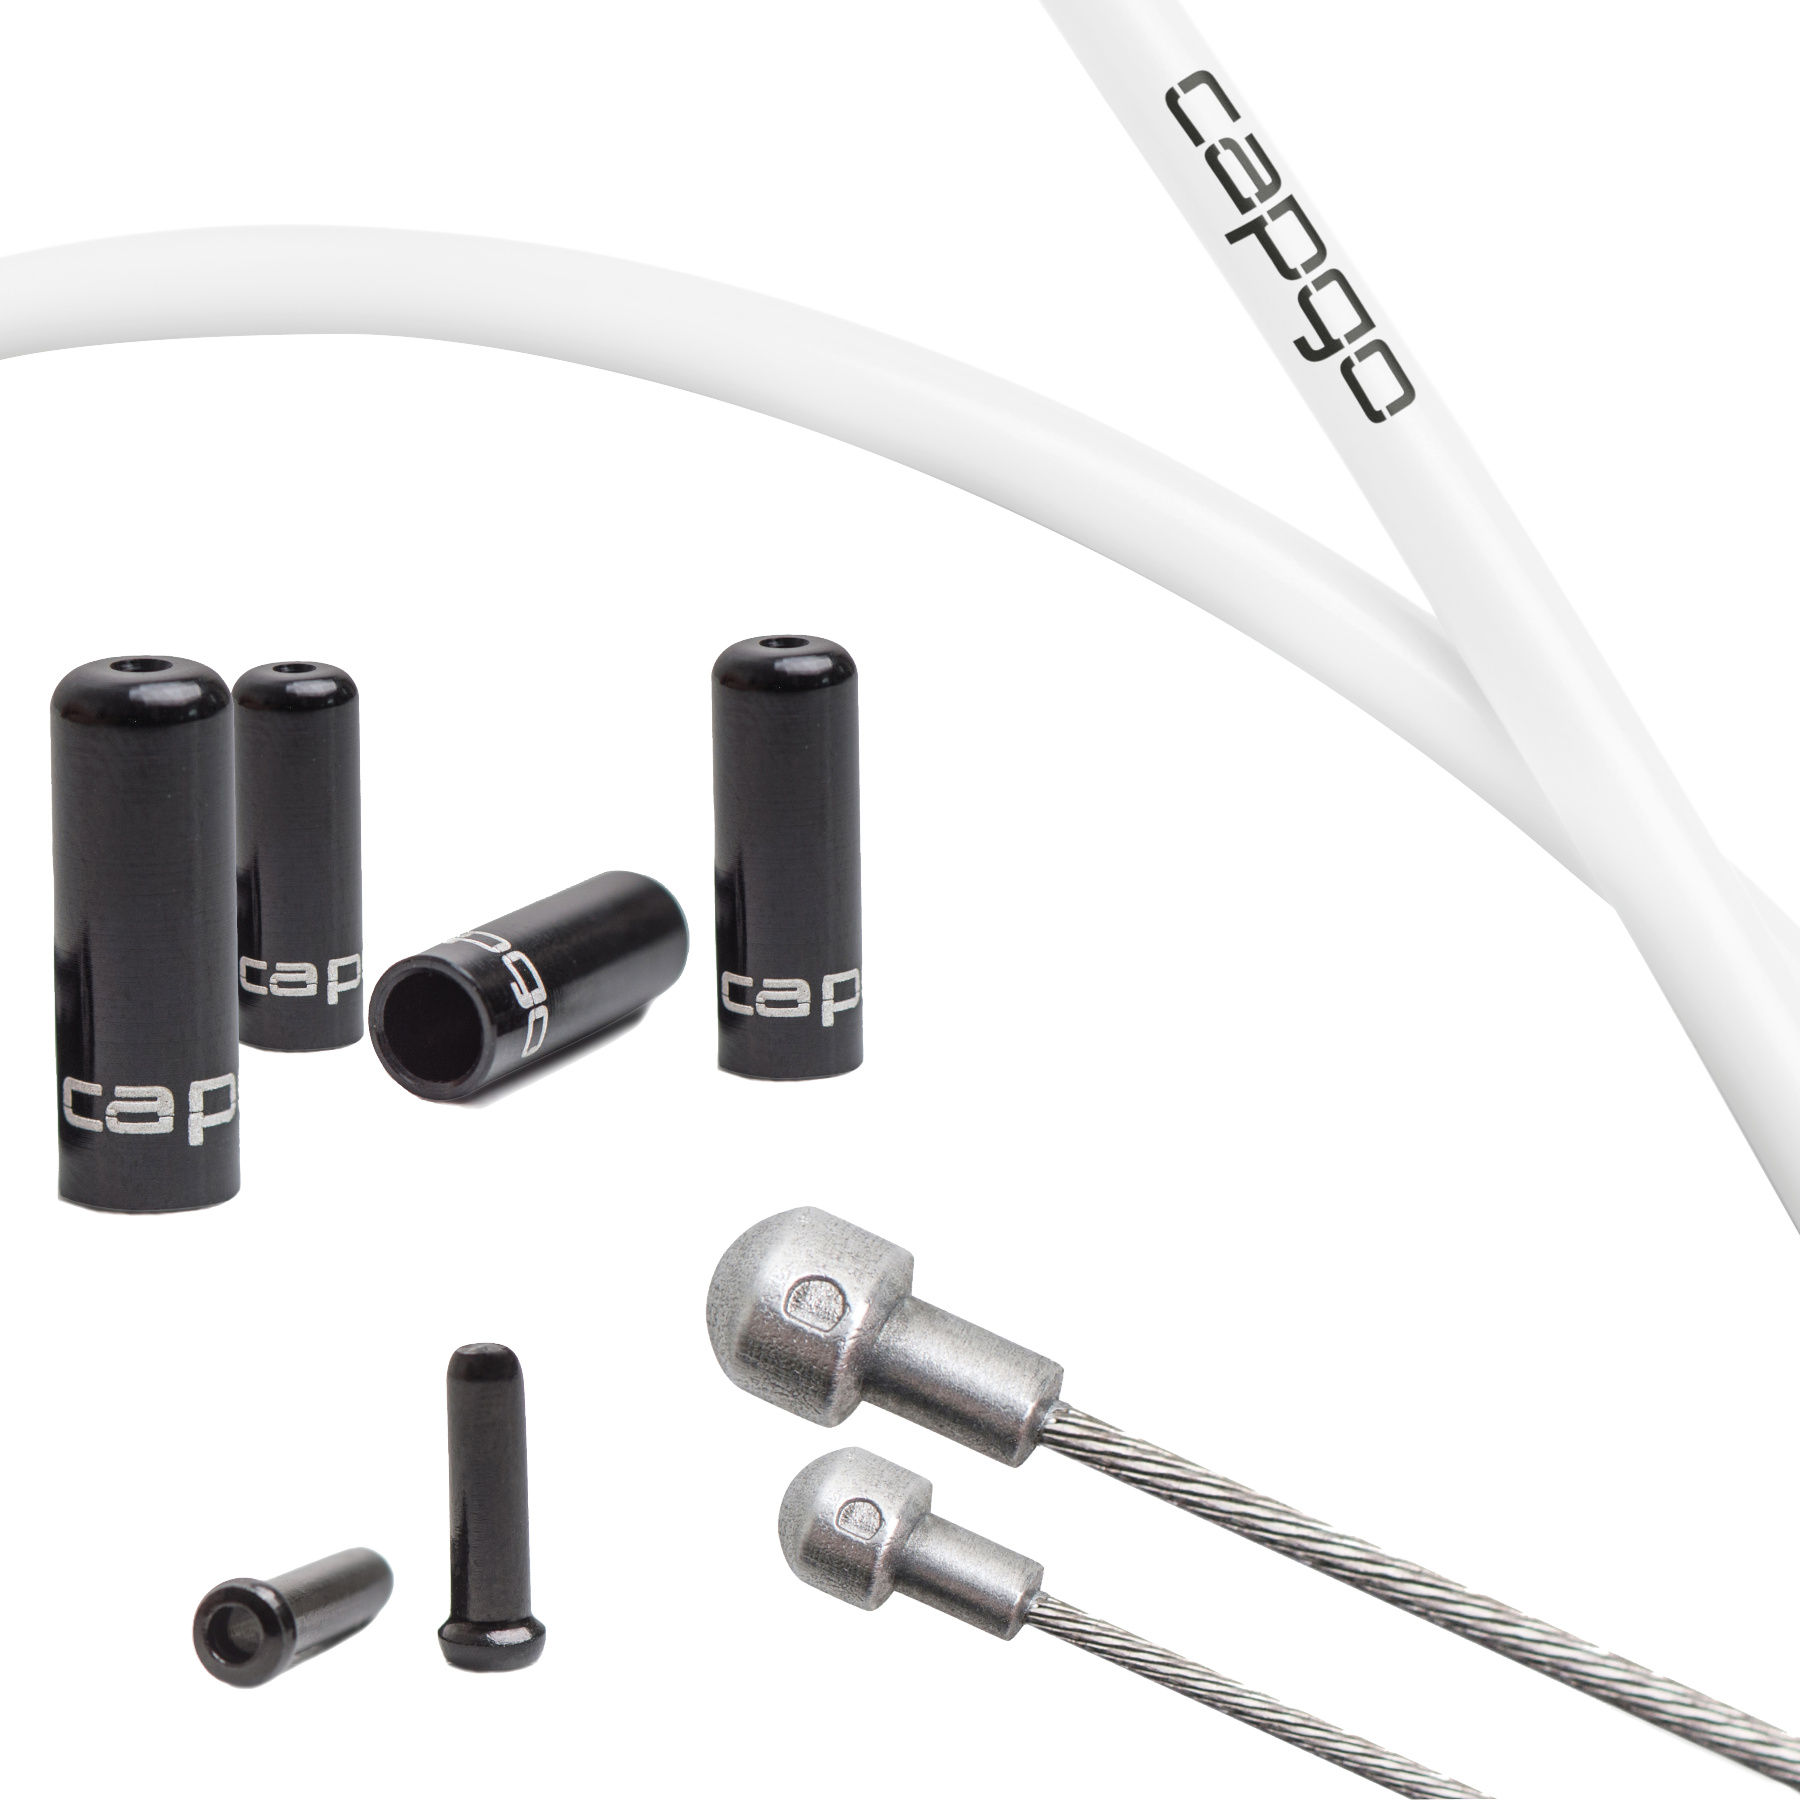 Productfoto van capgo Blue Line Brake Cable Set - Stainless Steel - PTFE - Shimano/SRAM Road - white